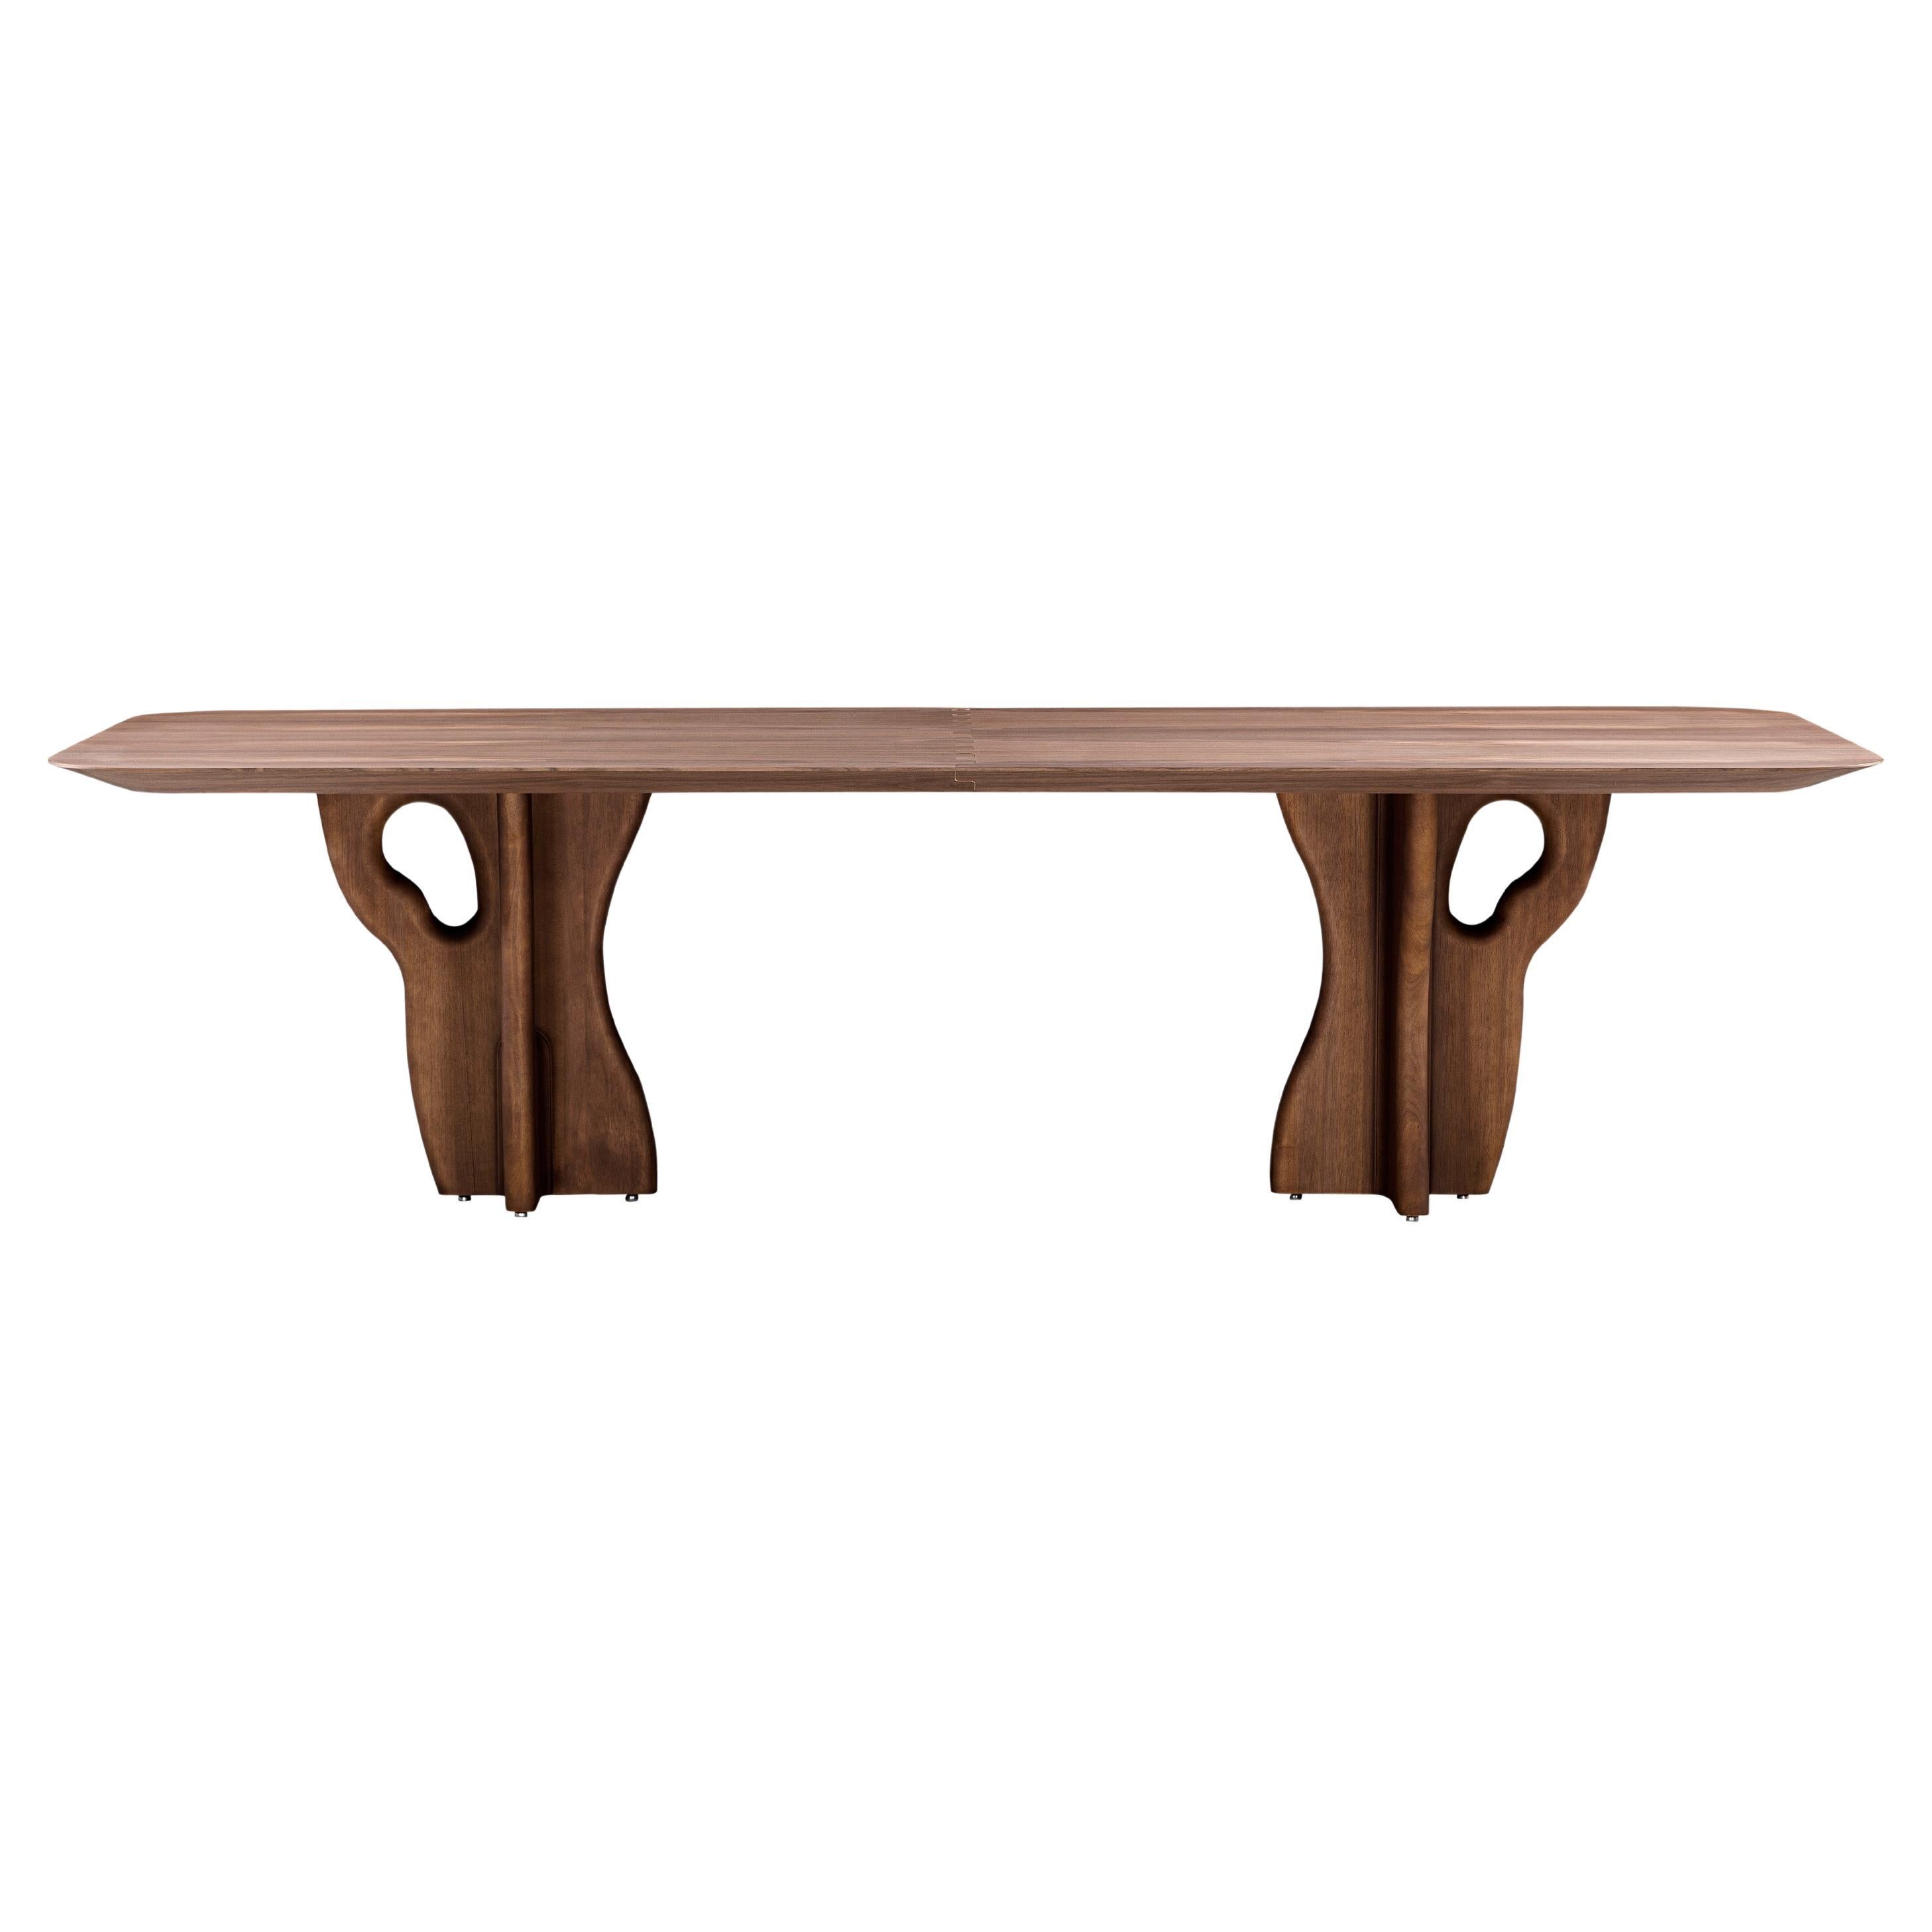 Suma Dining Table with Walnut Veneered Top and Organic Solid Wood Legs 110''